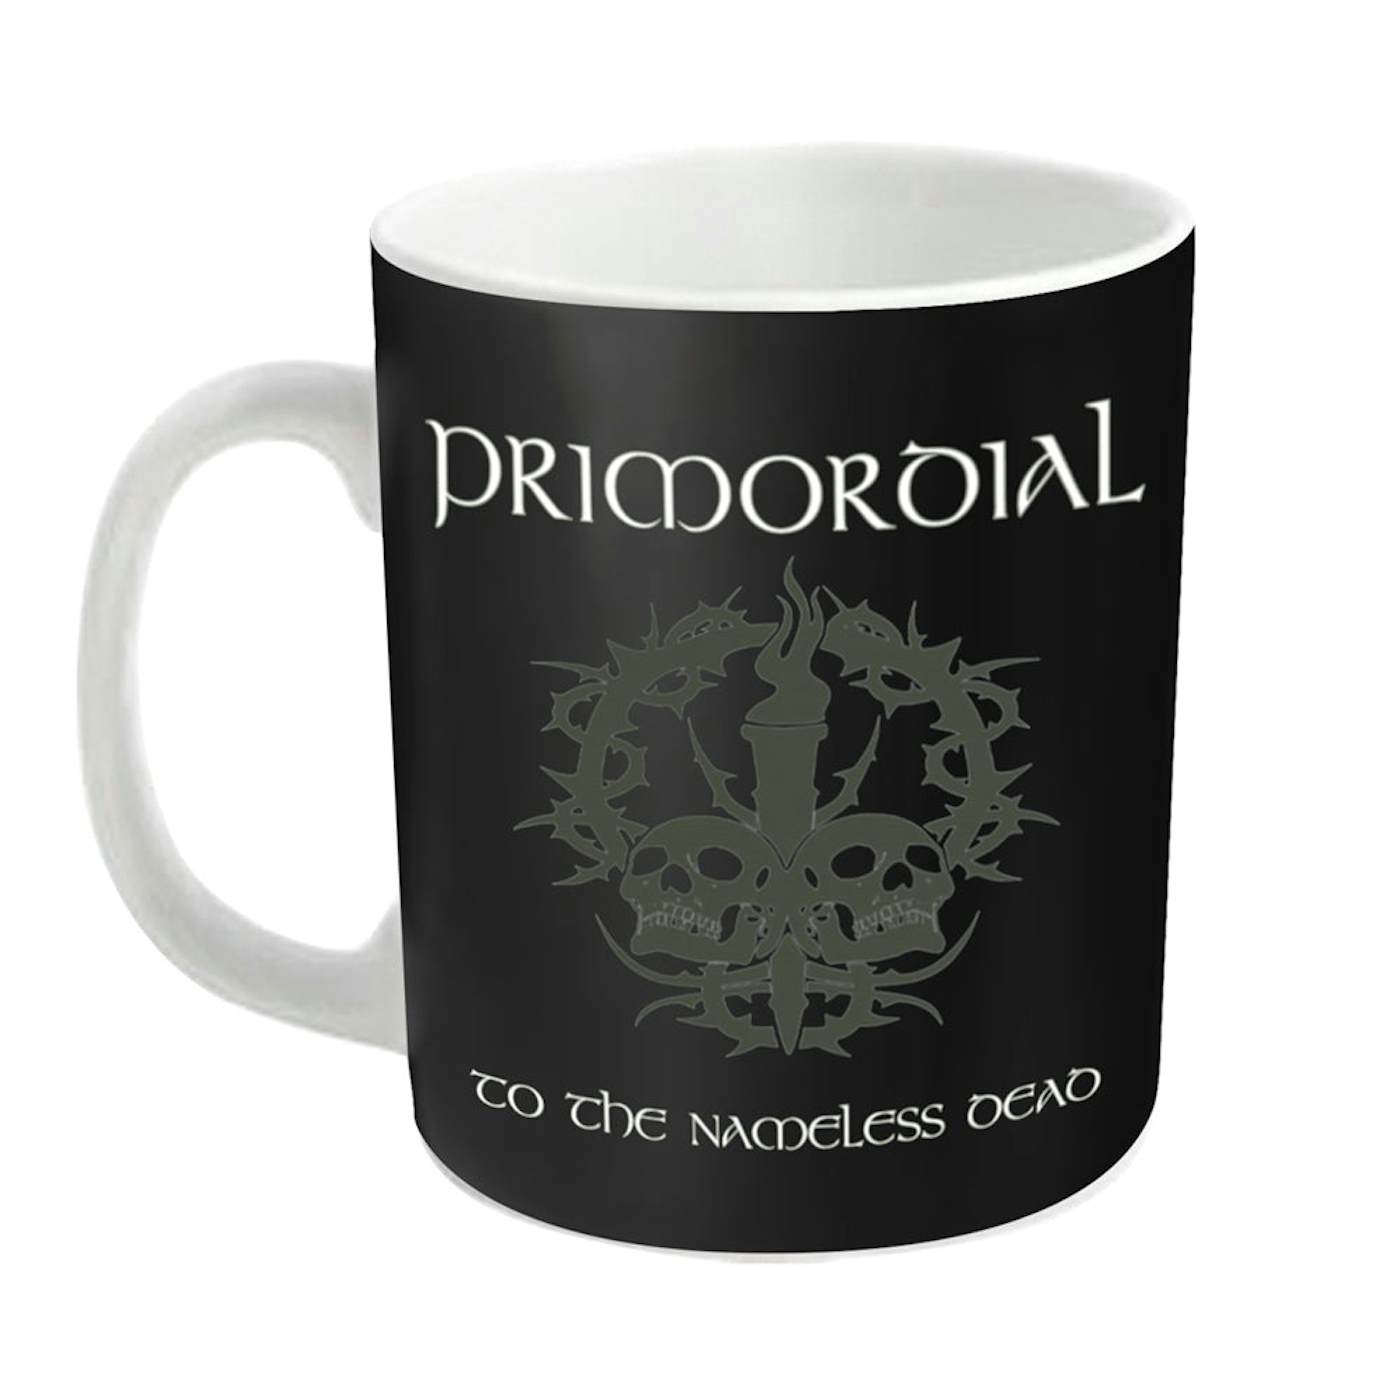 Primordial Mug - To The Nameless Dead